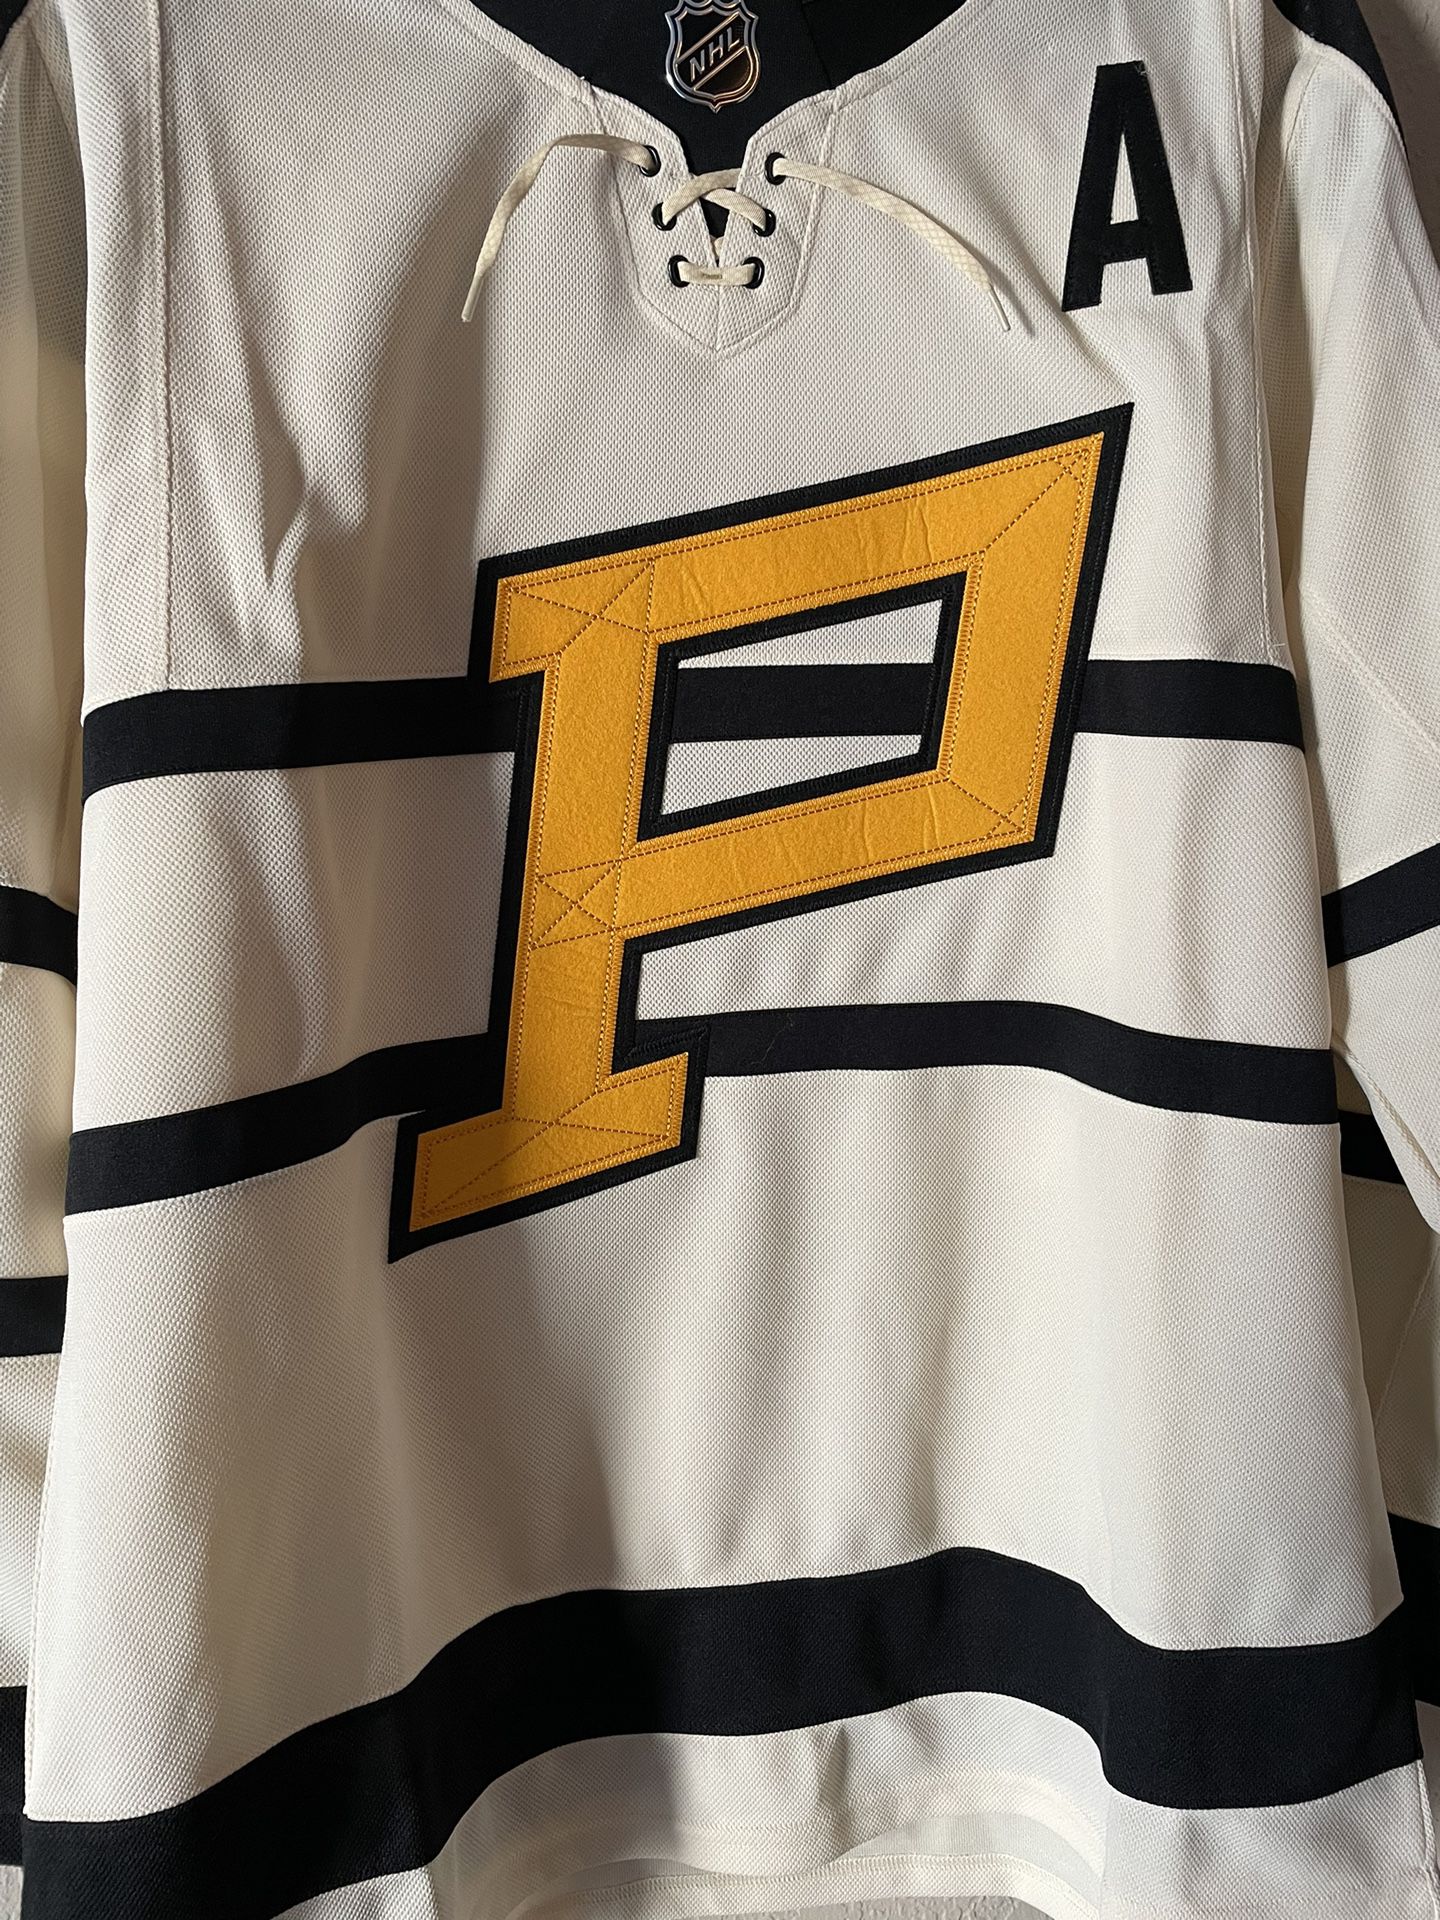 Kris Letang Pittsburgh Penguins Autographed Adidas Authentic